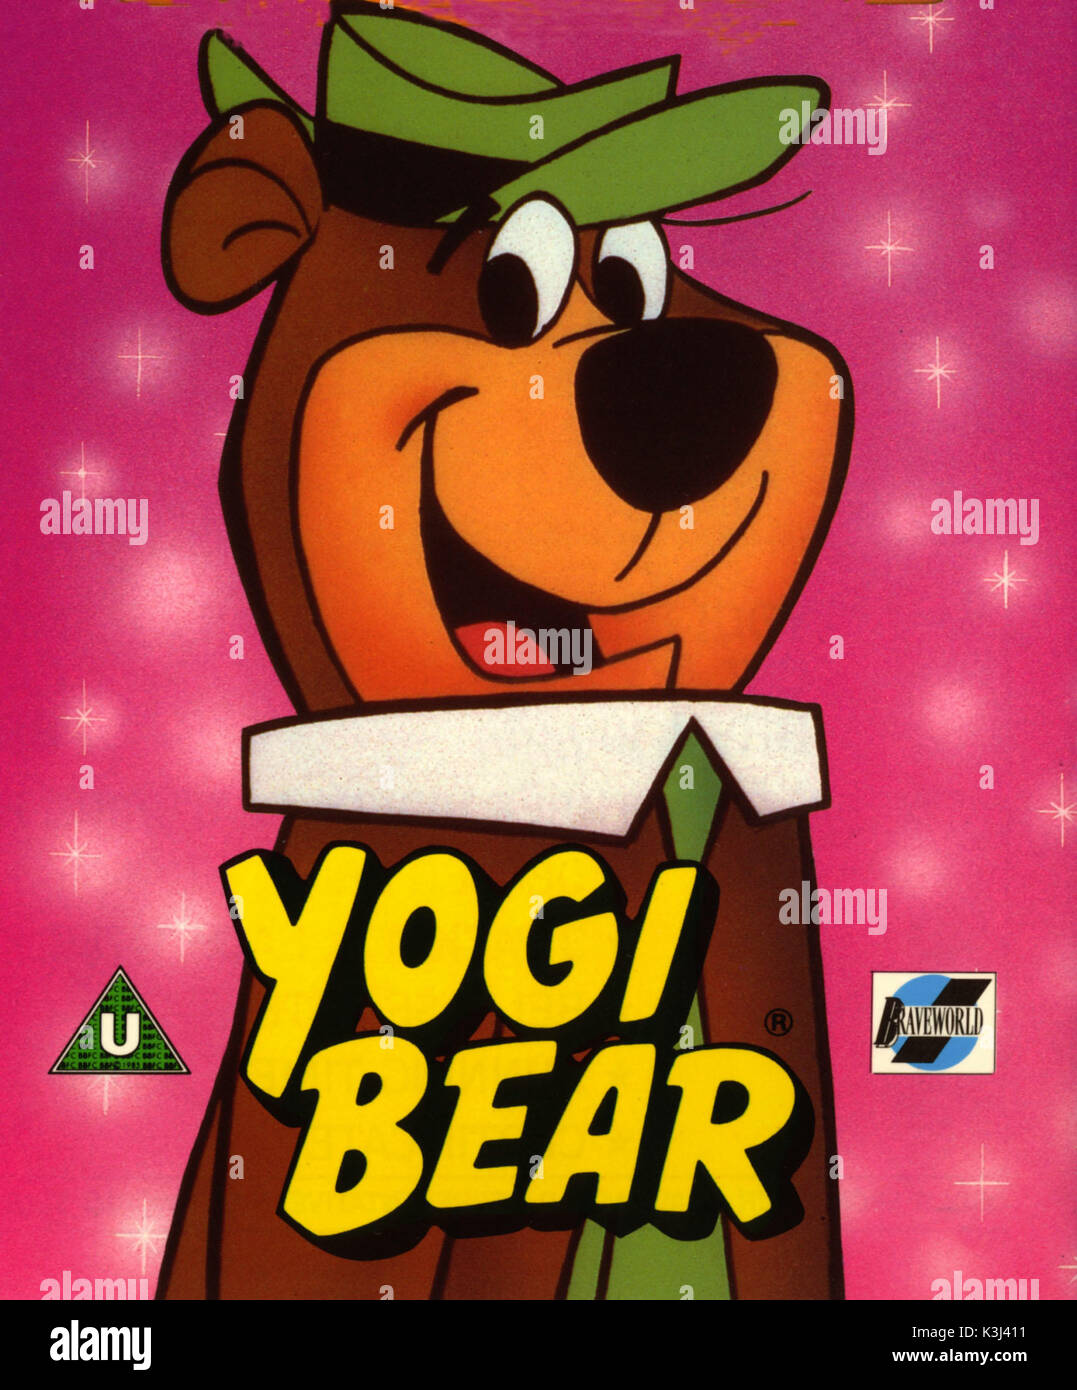 YOGI BEAR NOCH ZU REINIGEN/PHOTOSHOP BILD Yogi Bear Stockfoto